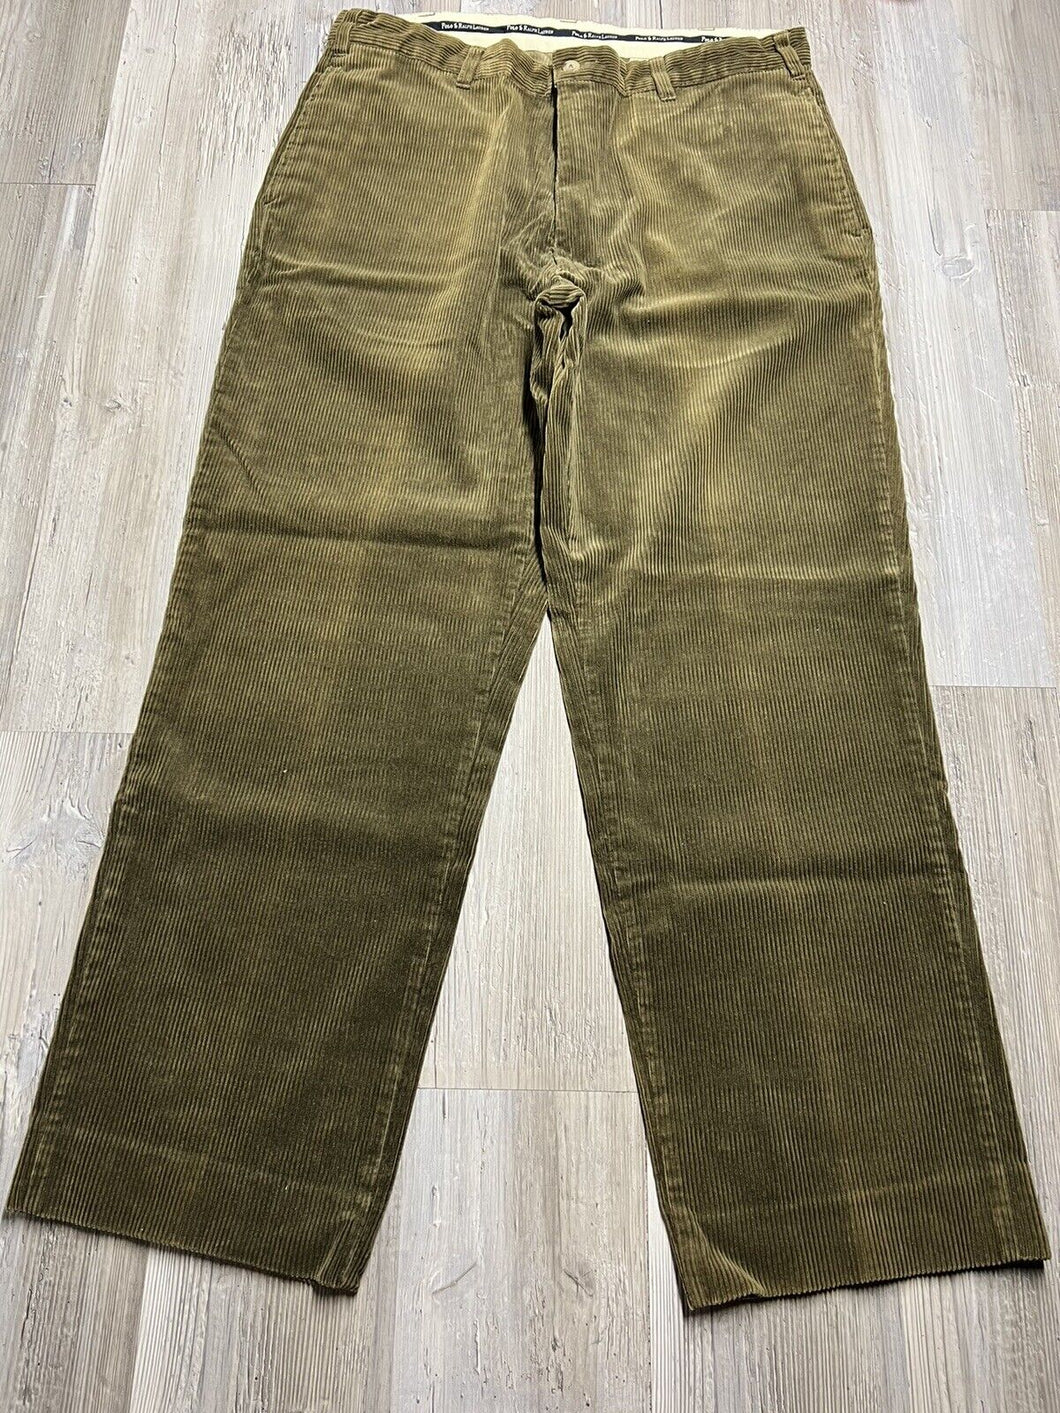 Vintage Polo Ralph Lauren Cords Corduroy Pants – Olive Green – Size 35 x 36